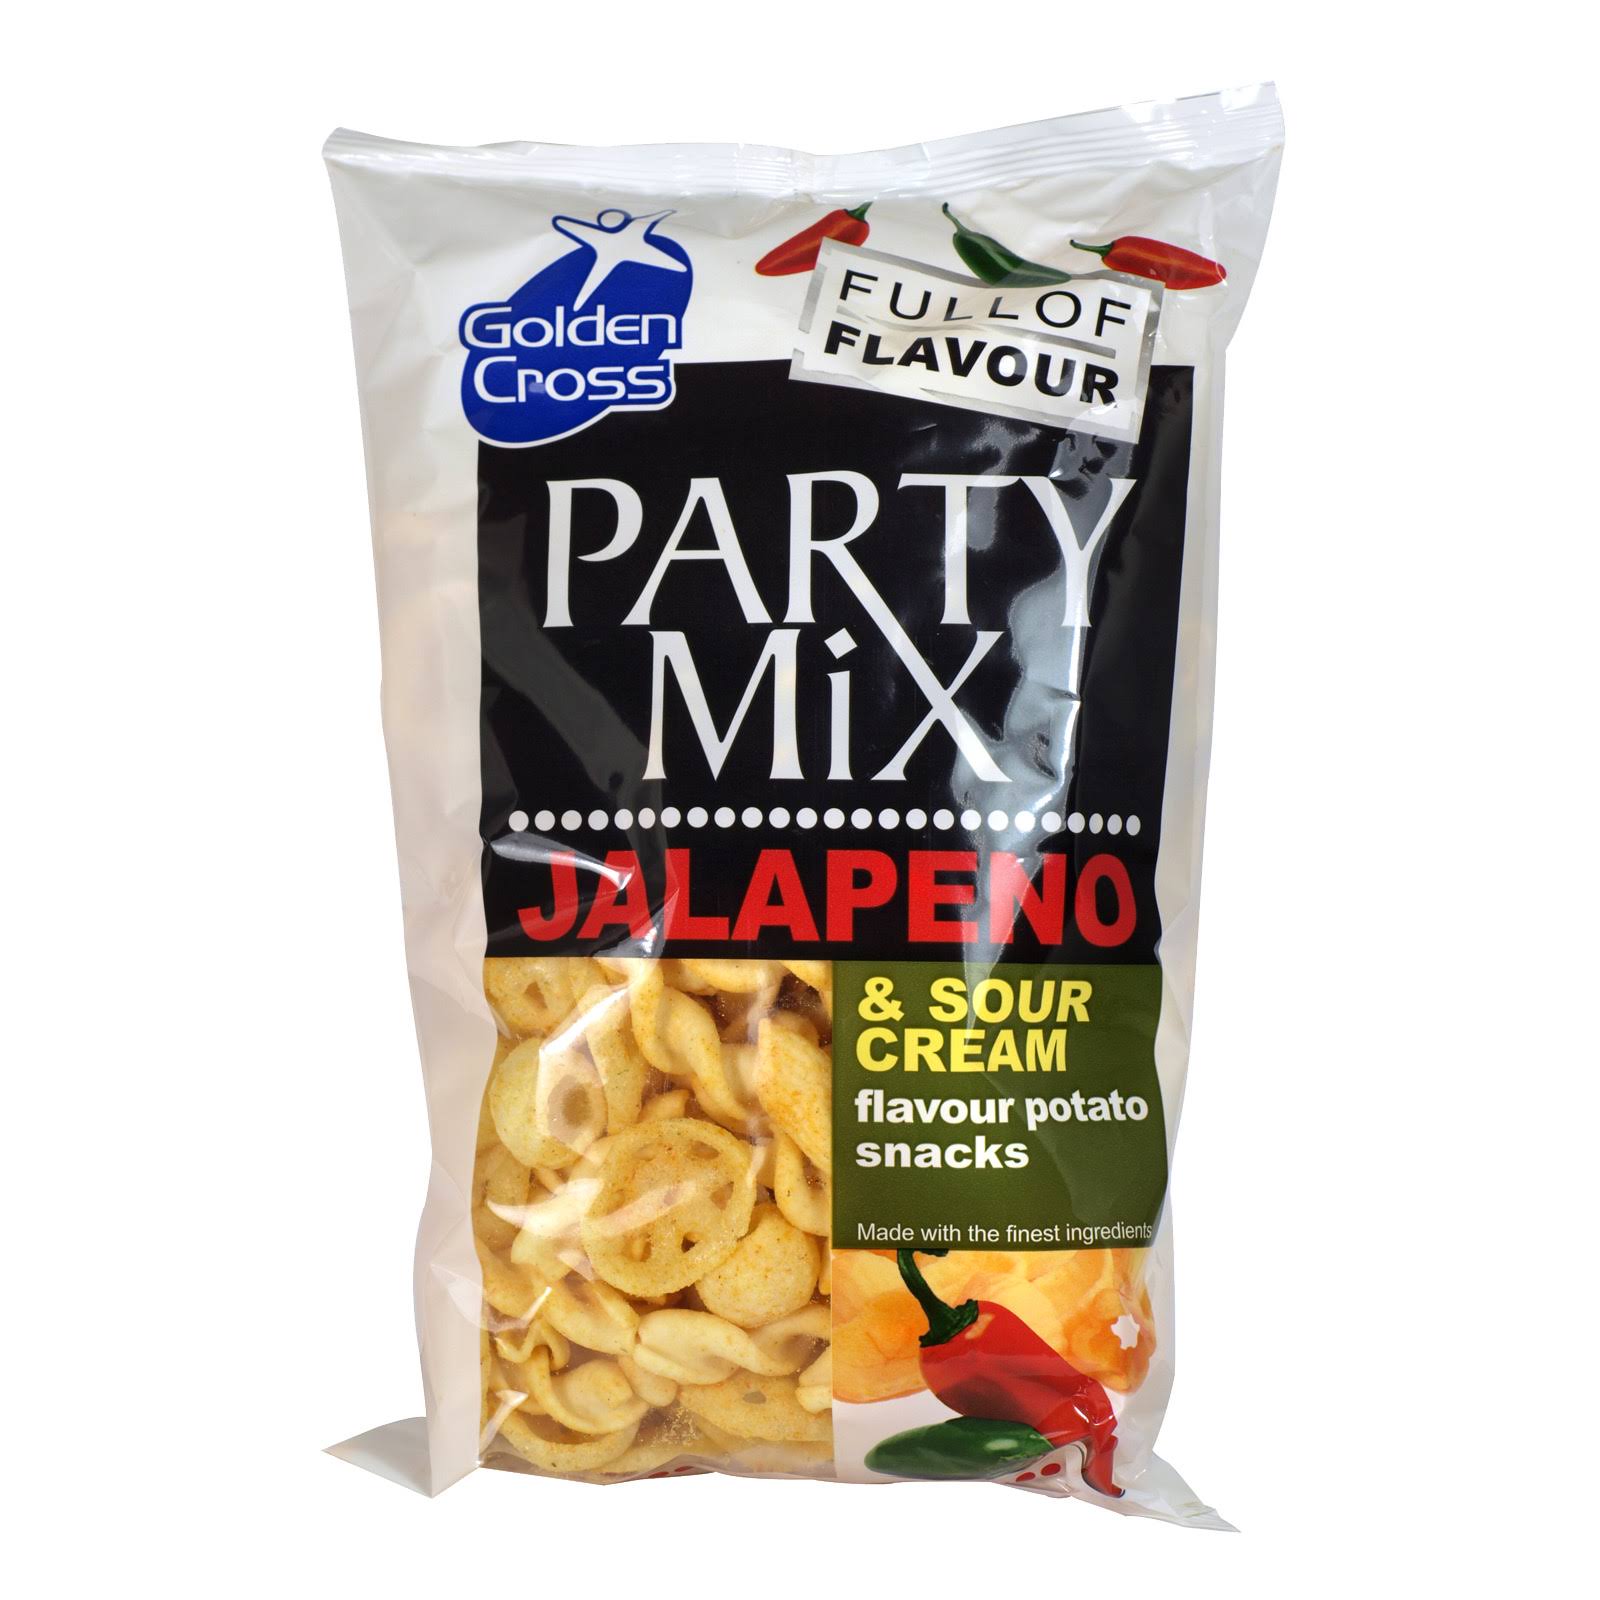 Golden Cross Party Mix Potato Snack - Jalapeno & Sour Cream, 125g